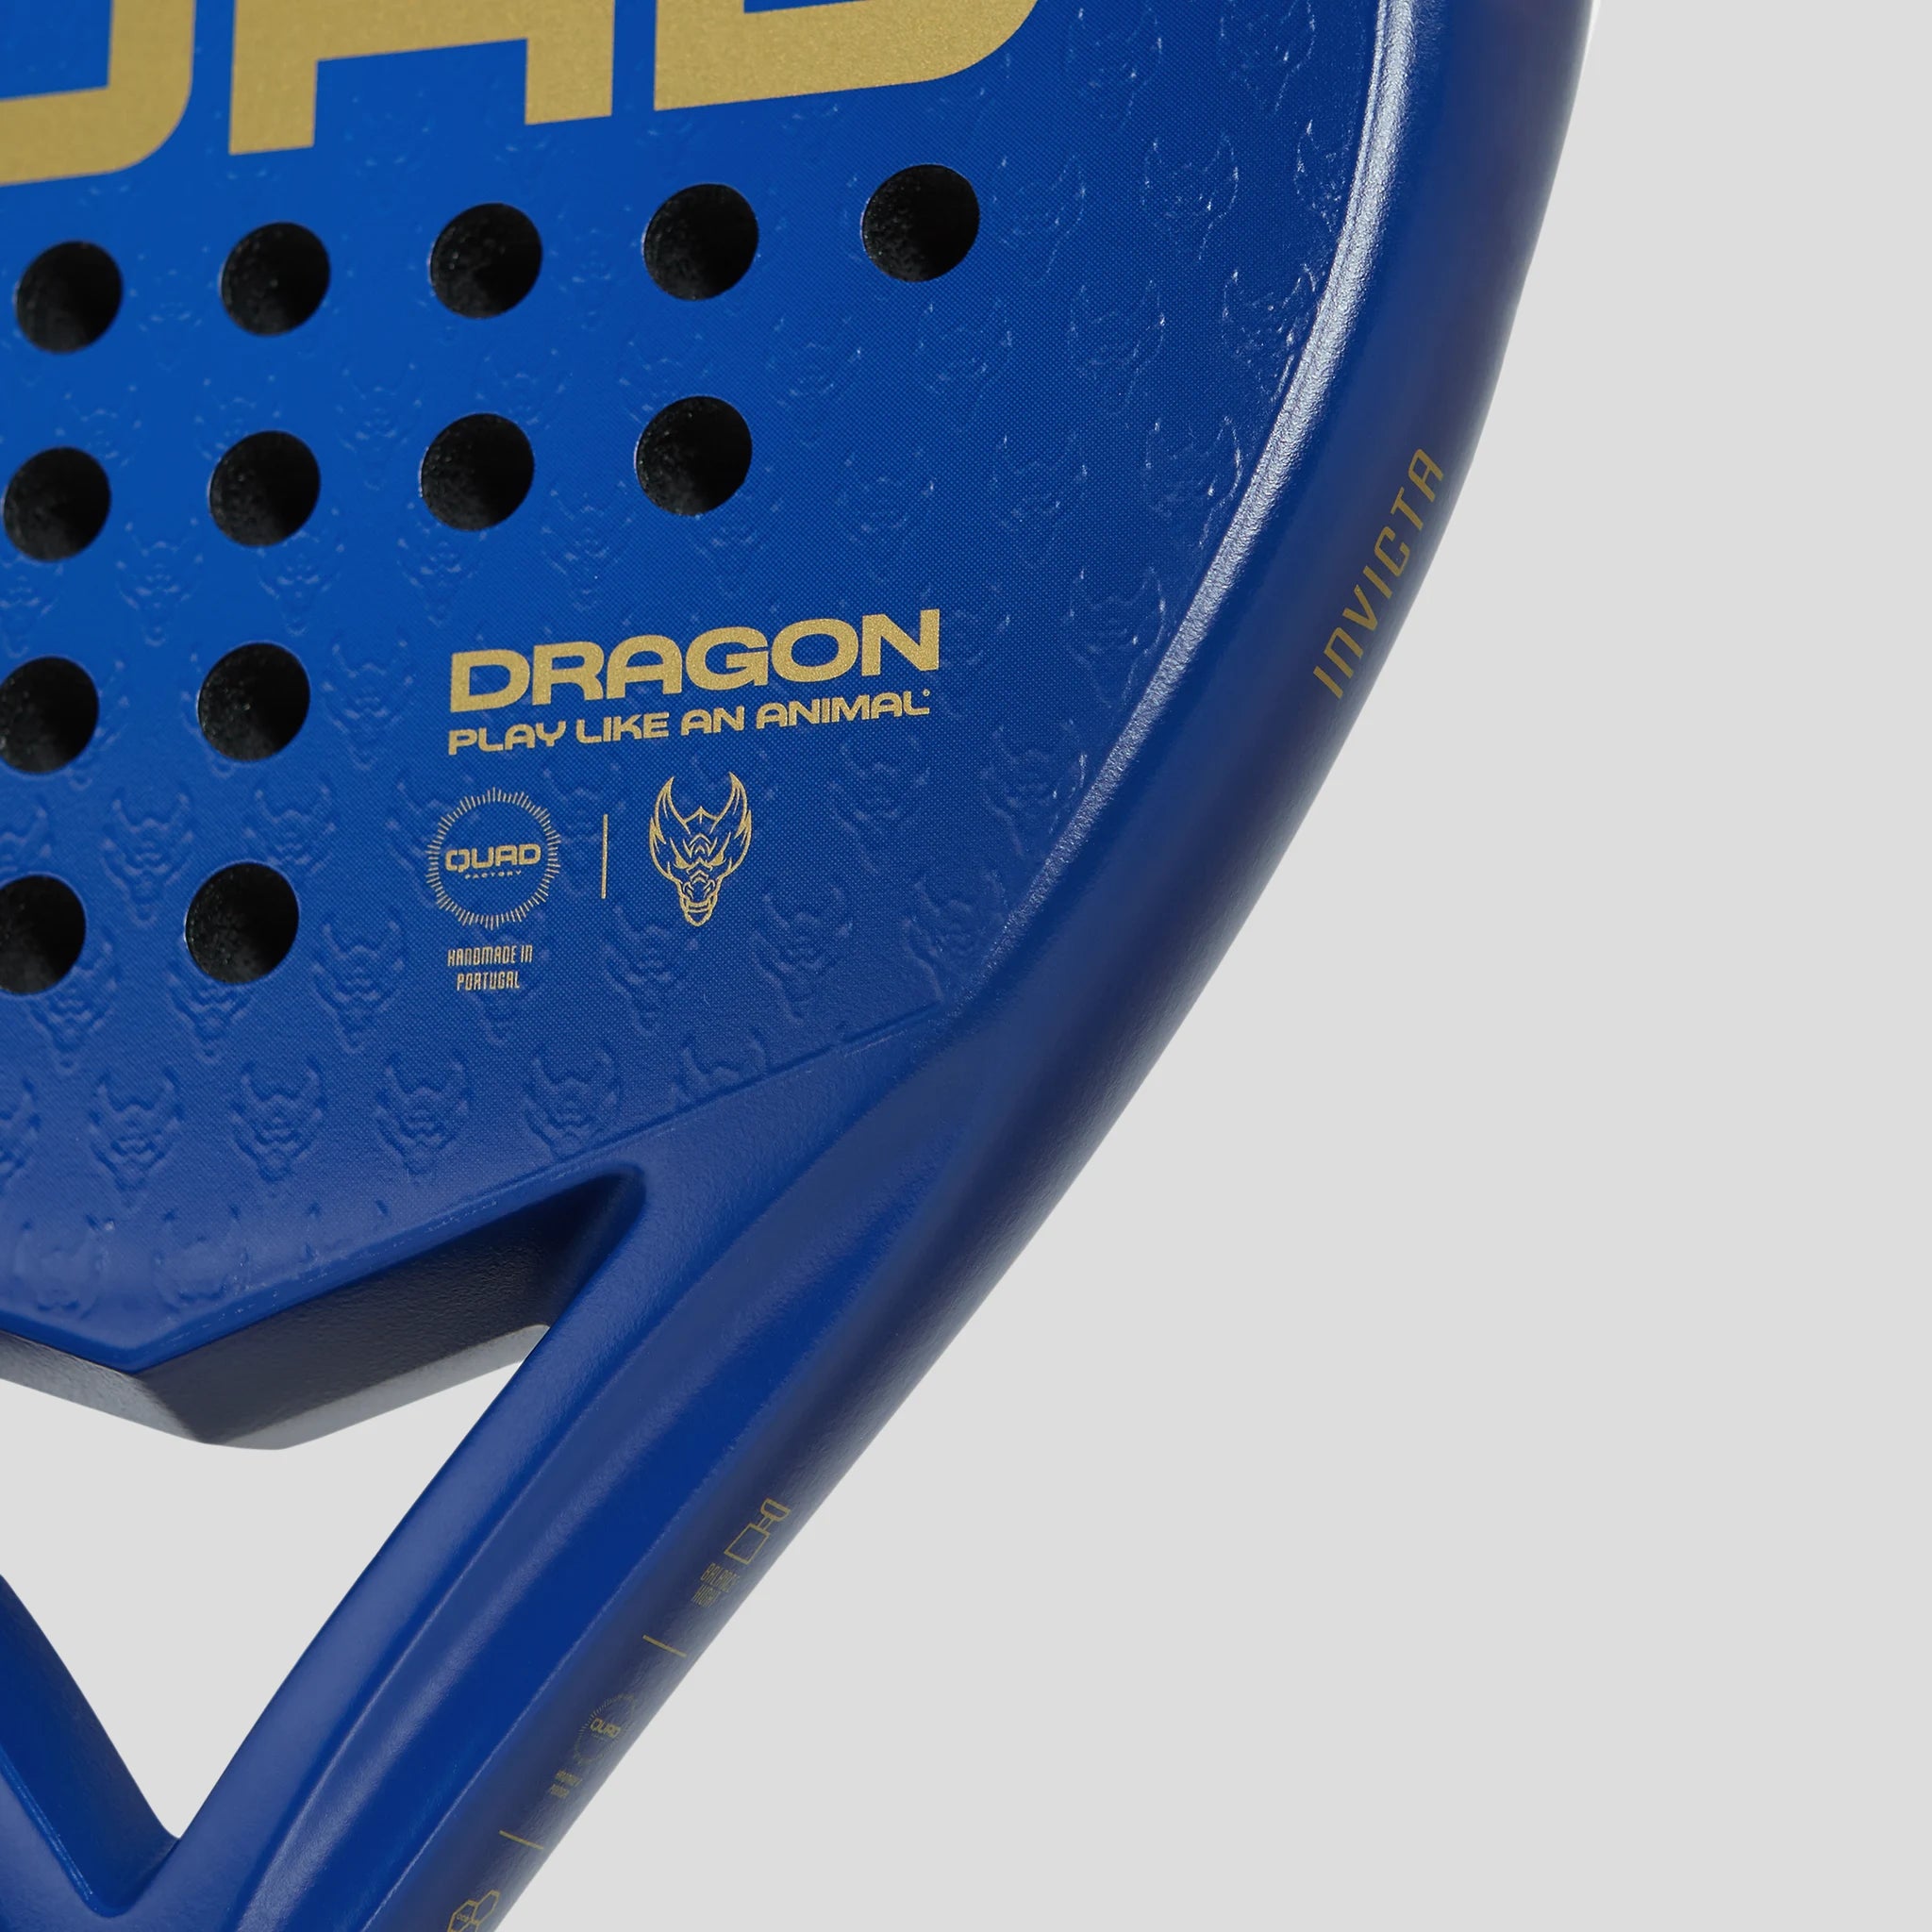 Quad Dragon Padel Racket detail view